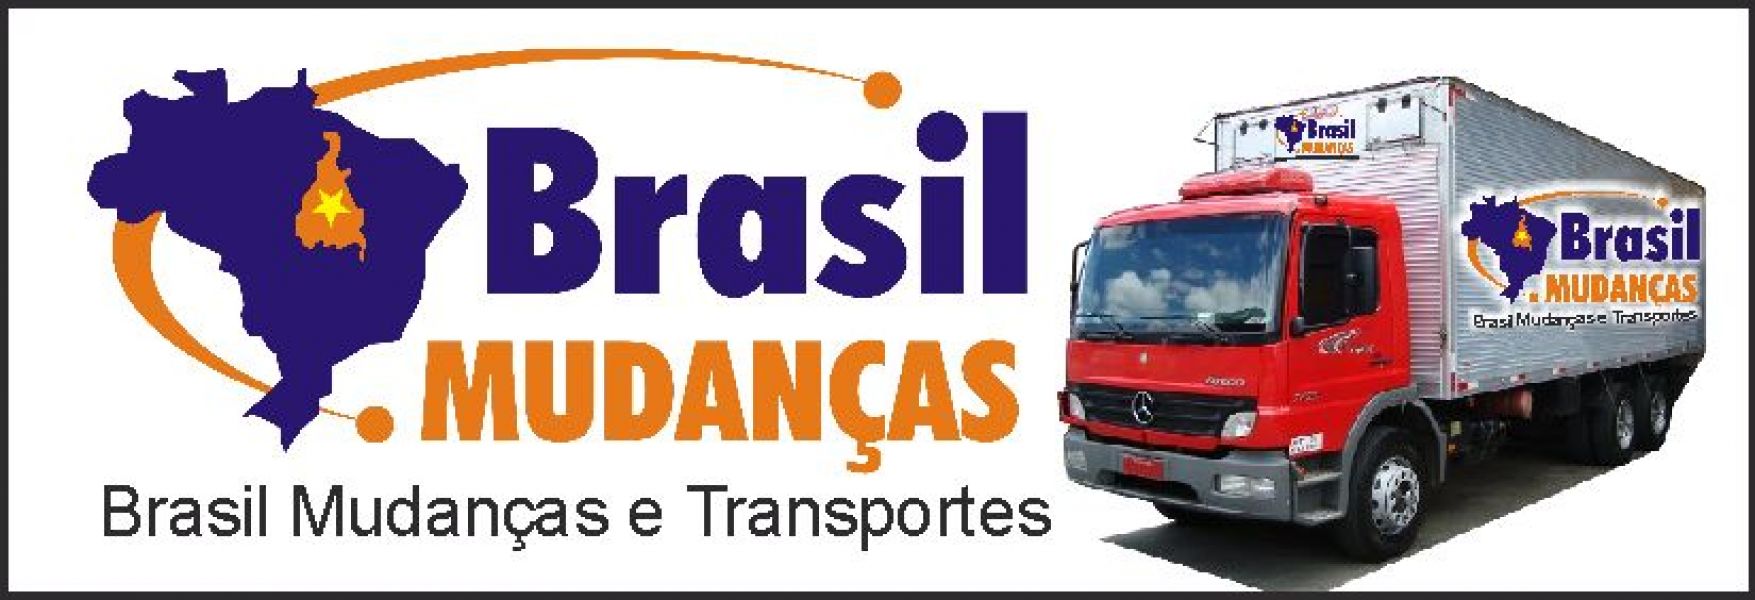 Brasil mudanas e transprotes (62)3298-5284 / 9611-7949